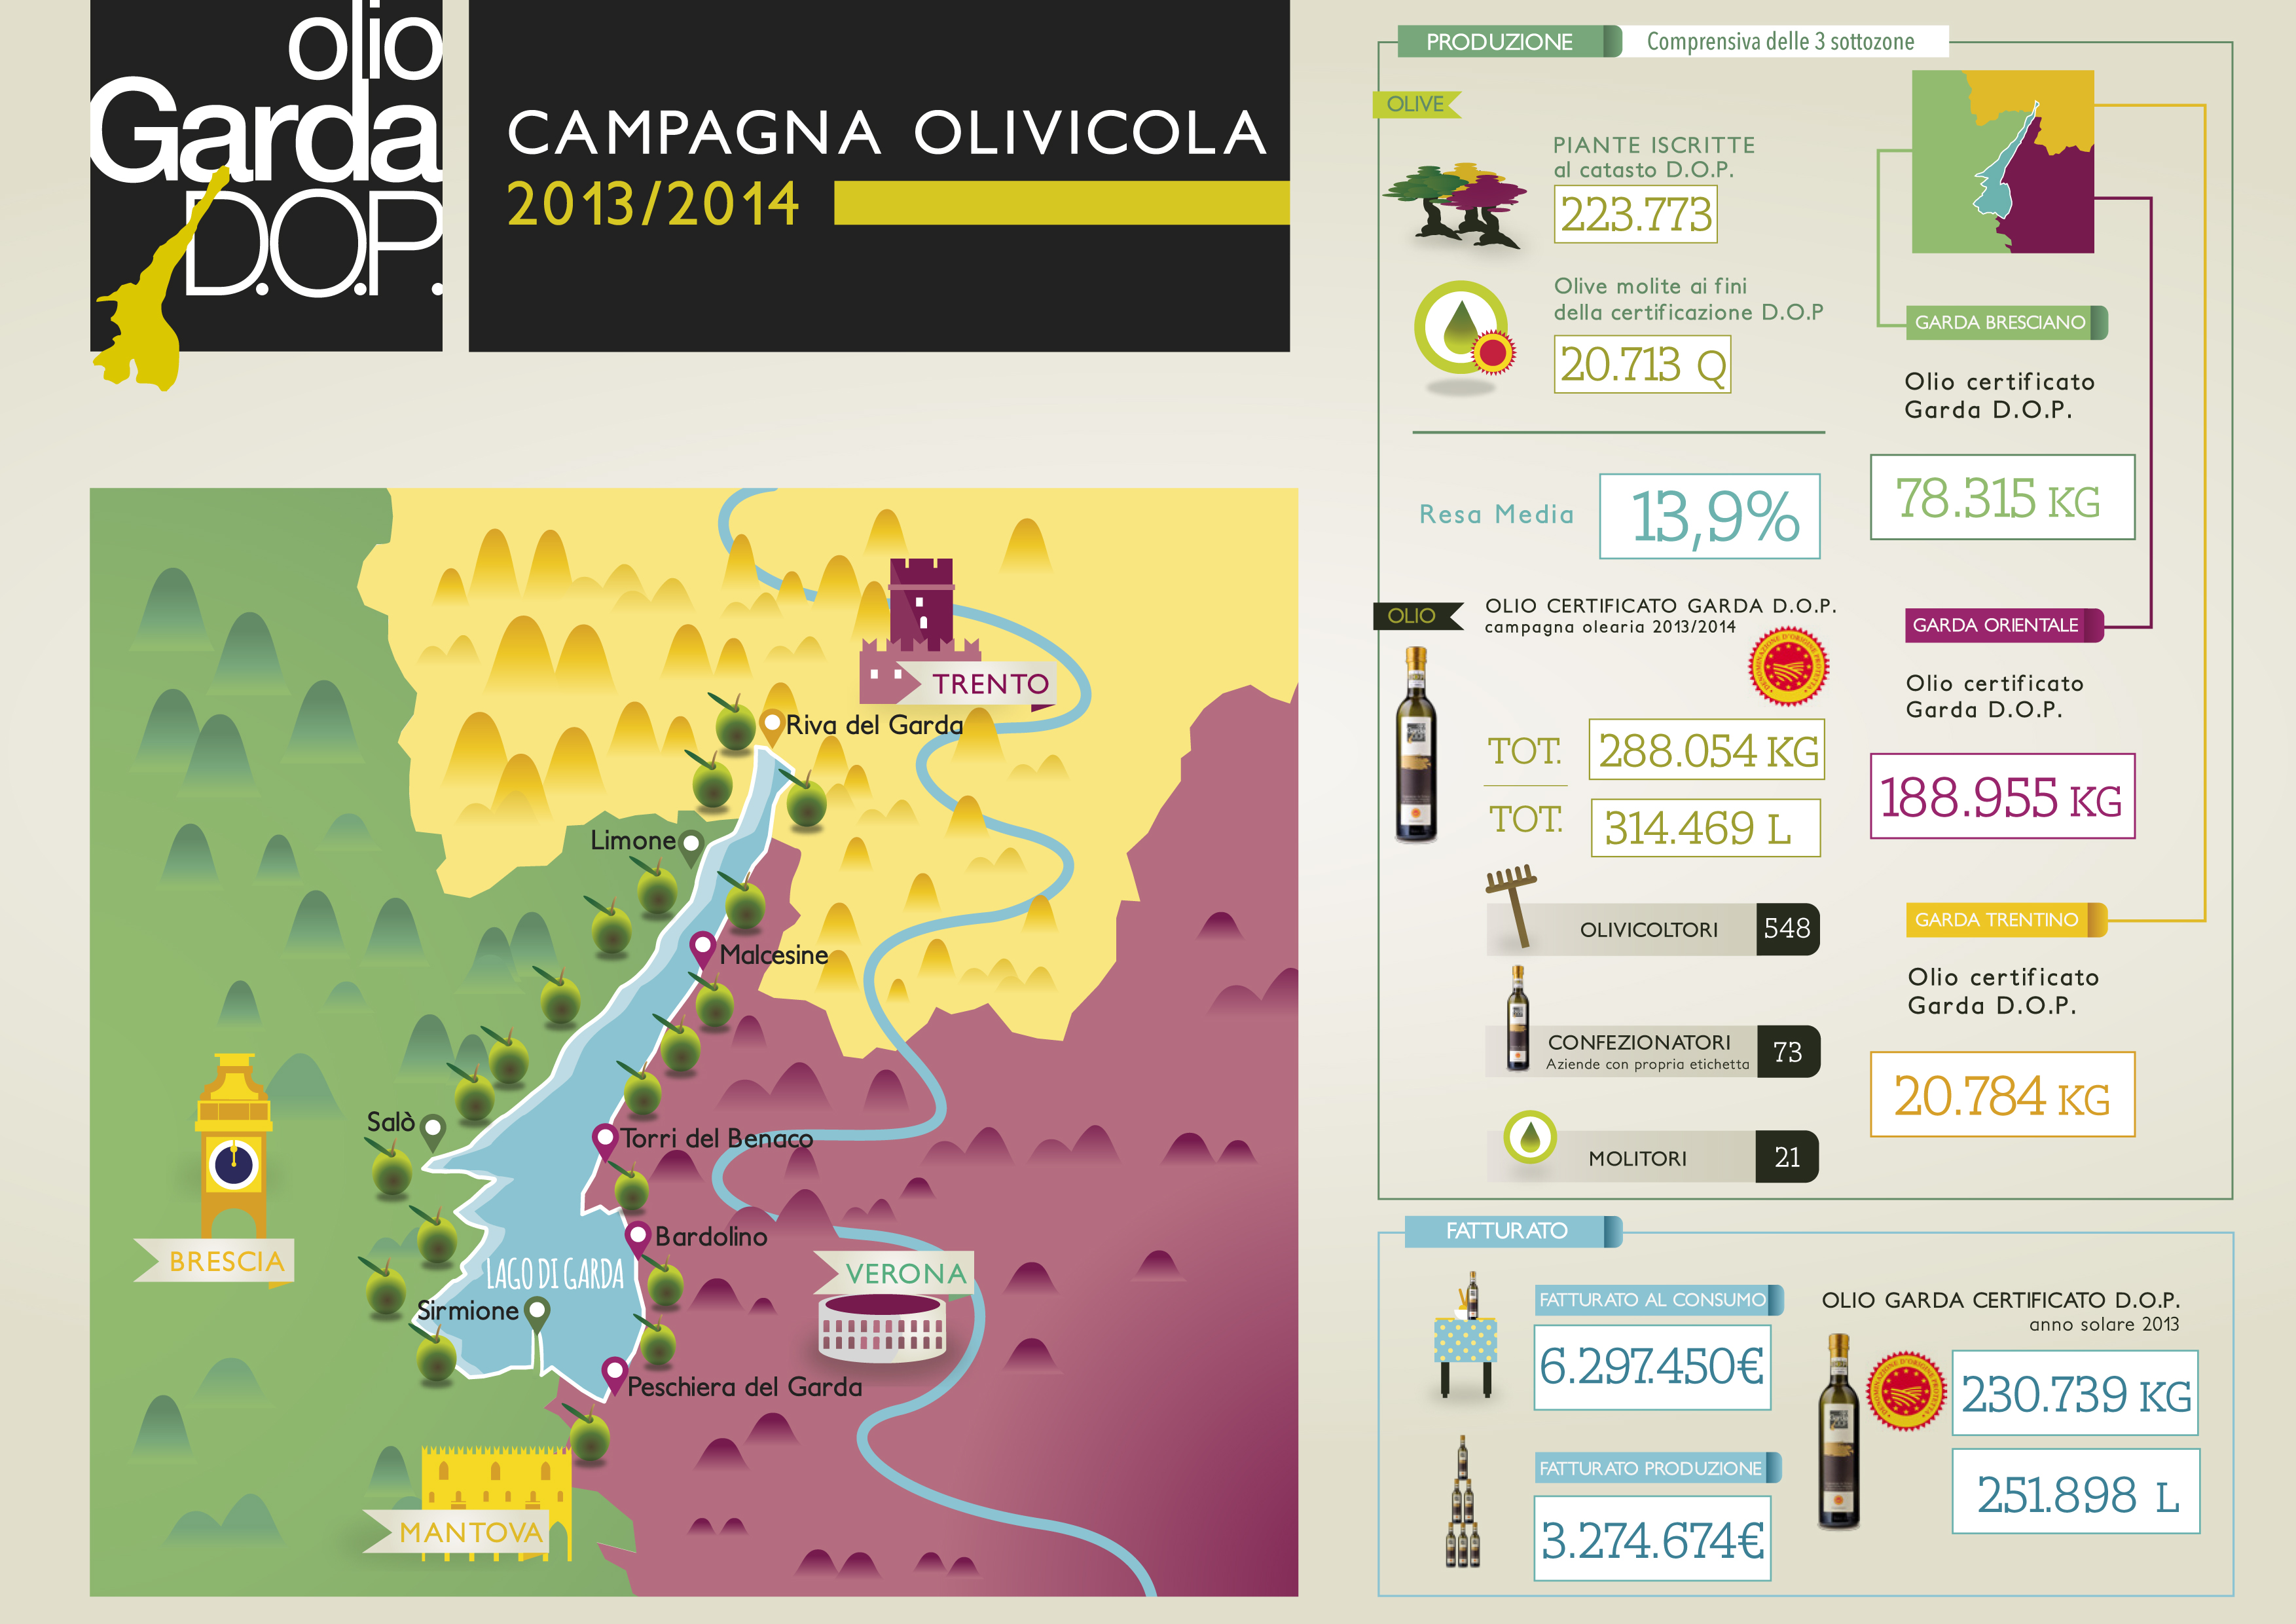 Campagna olivicola 2013/14